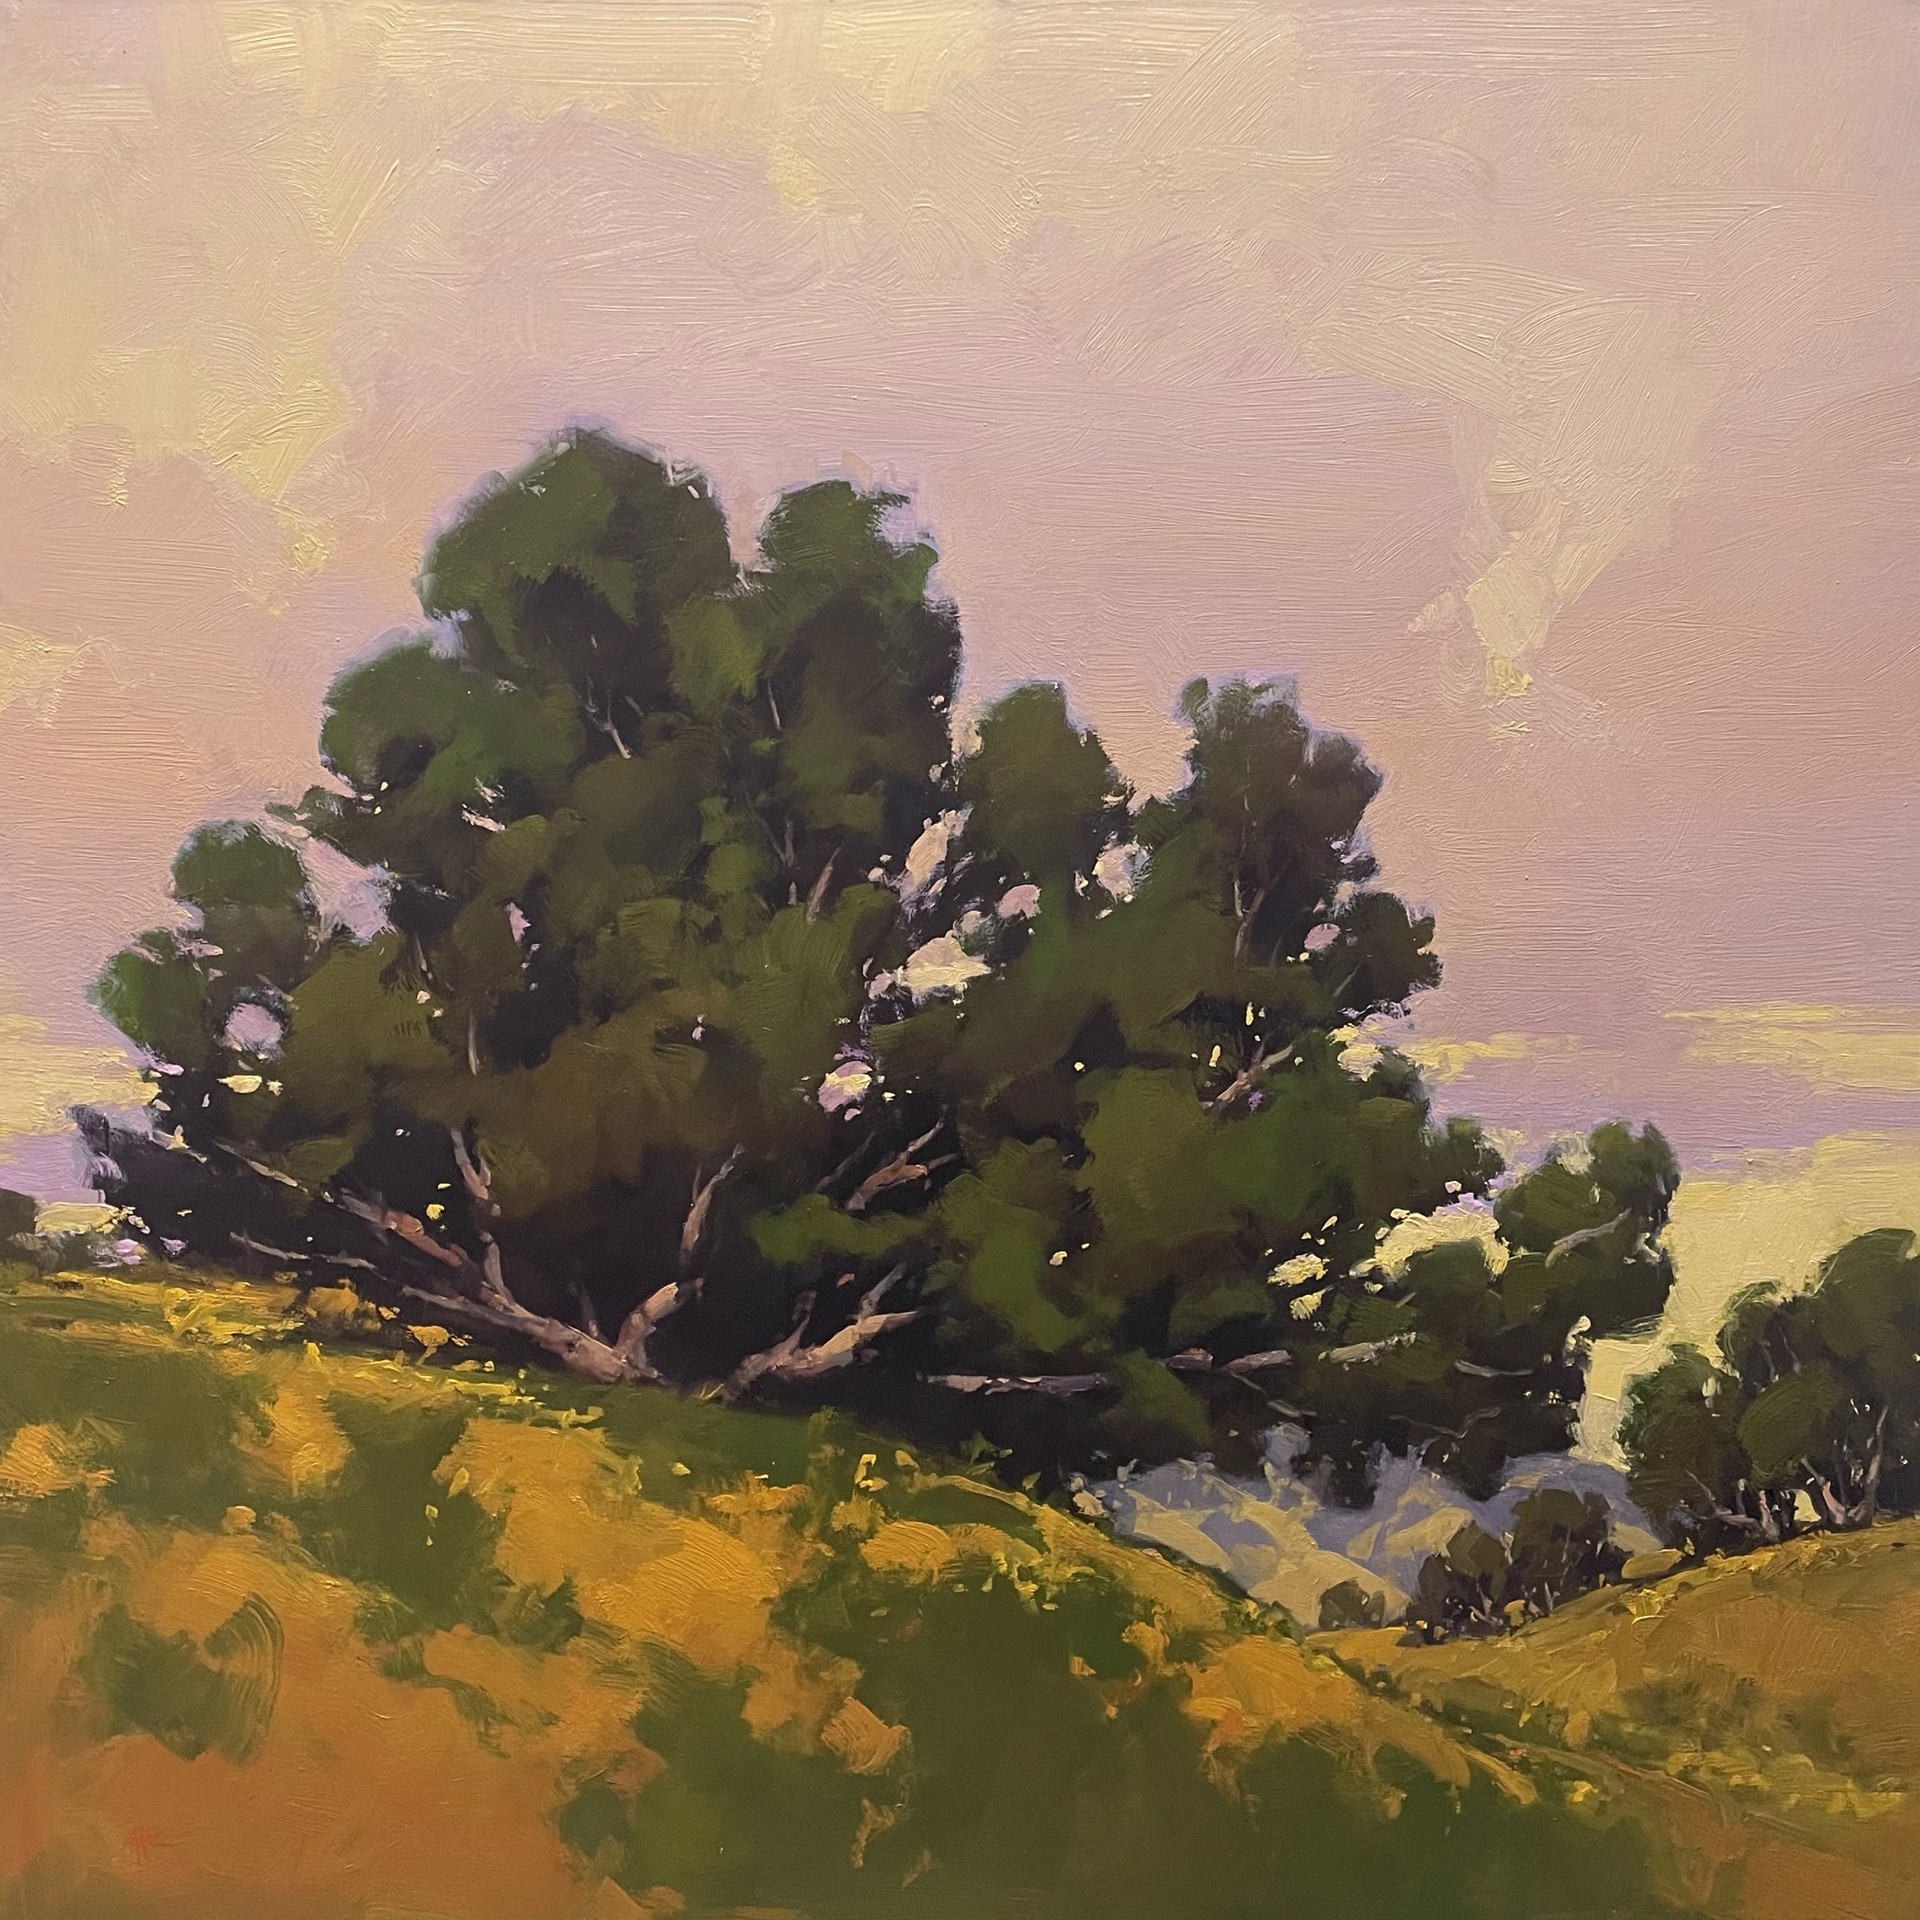 Oak at Dusk by Gregory Stocks